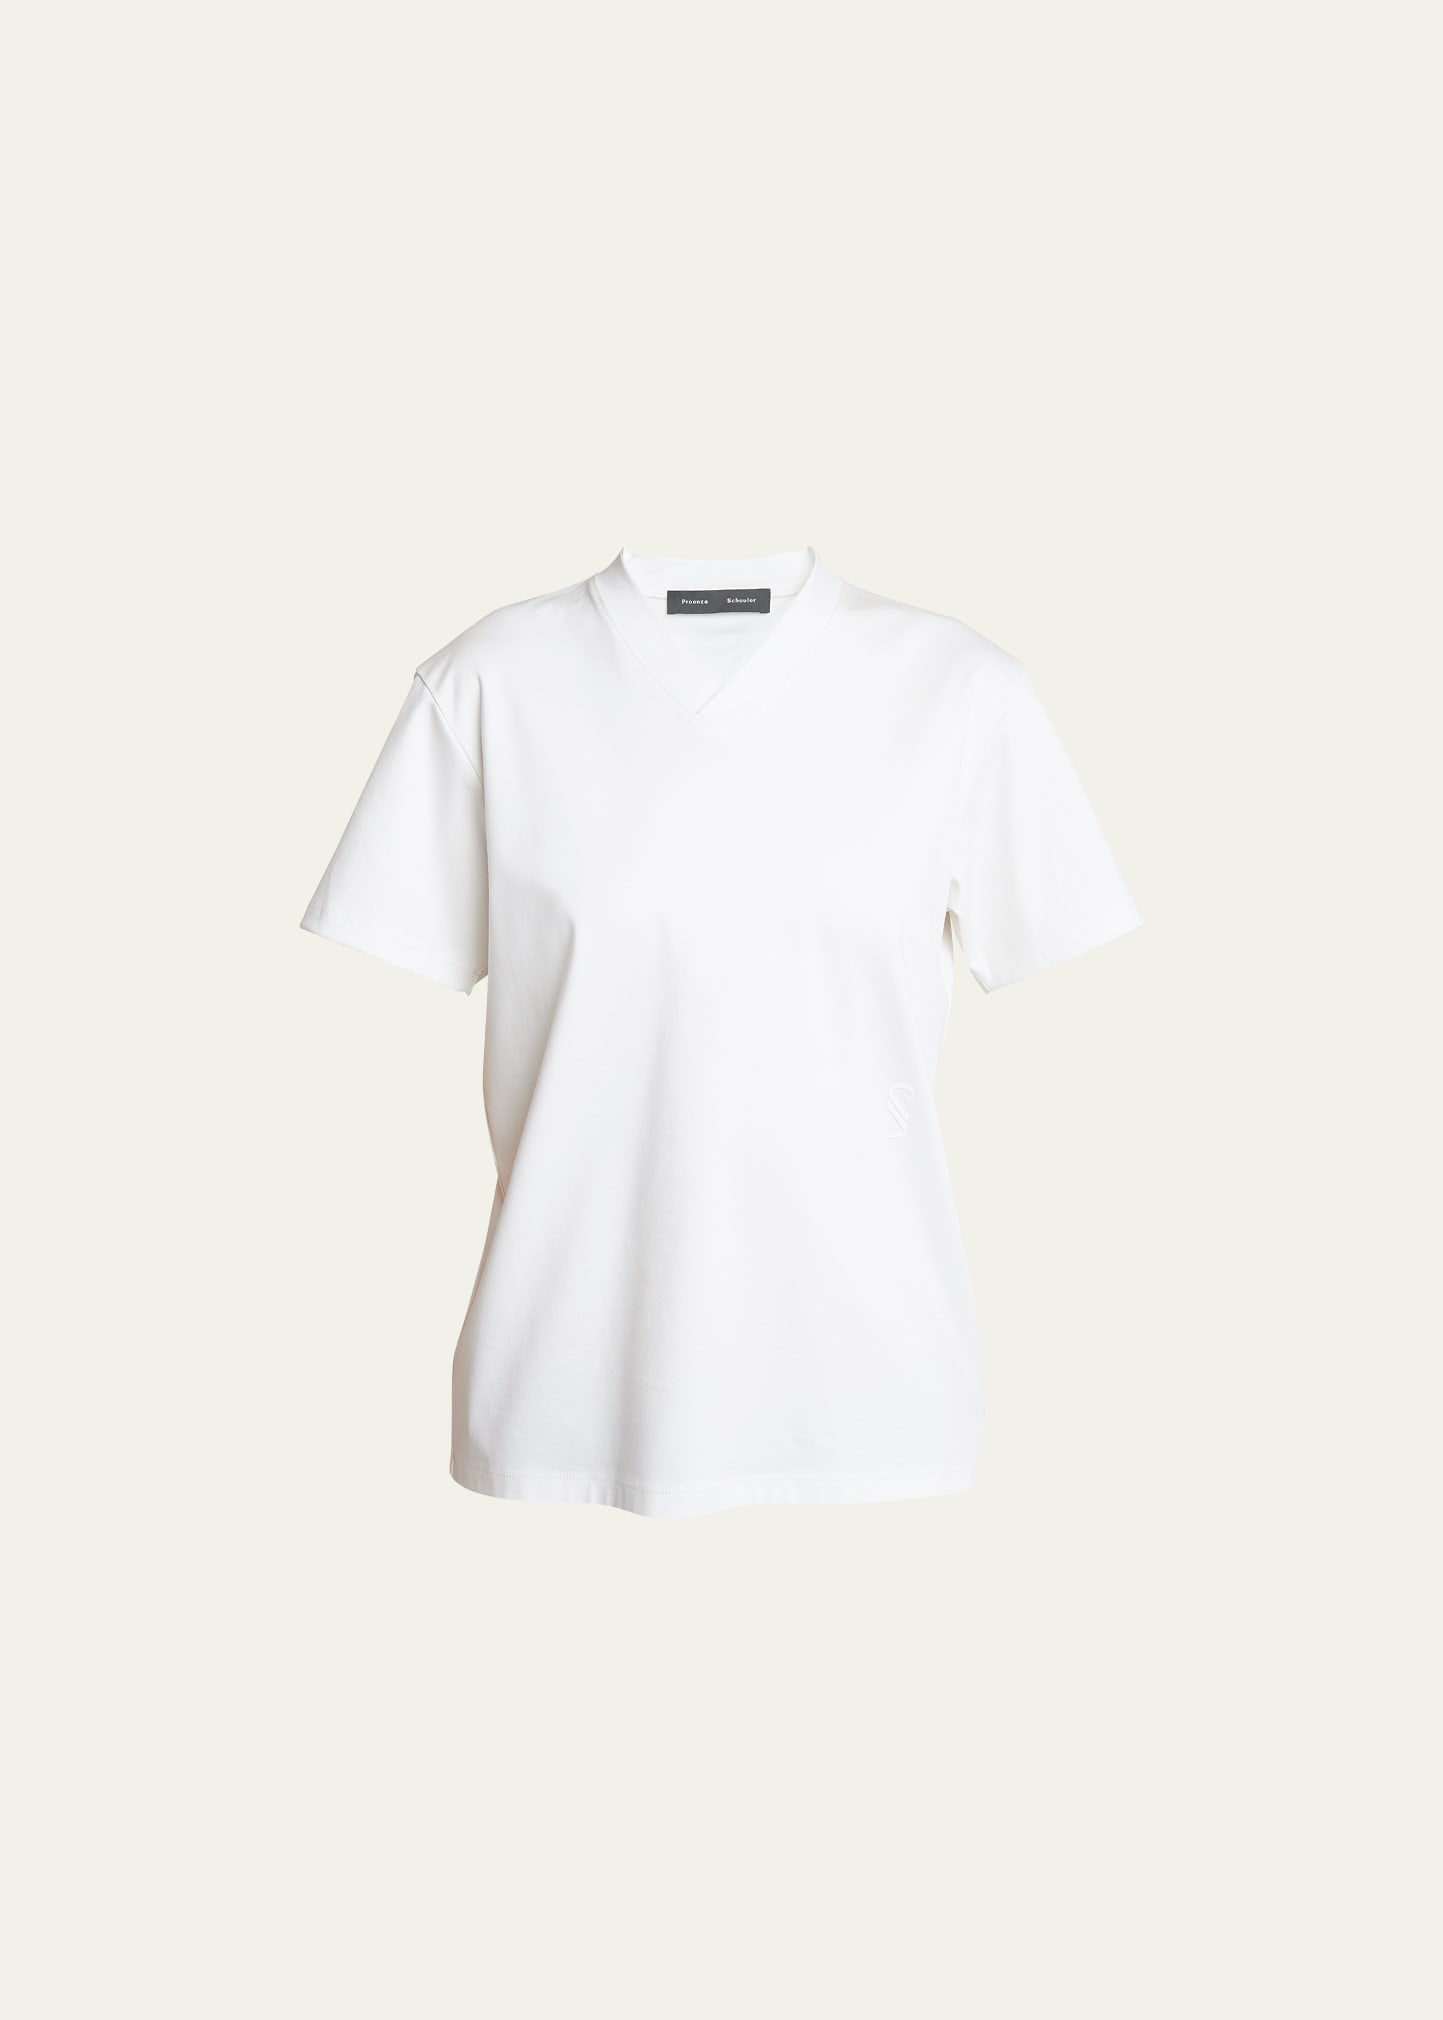 Talia Monogram V-Neck Jersey T-Shirt